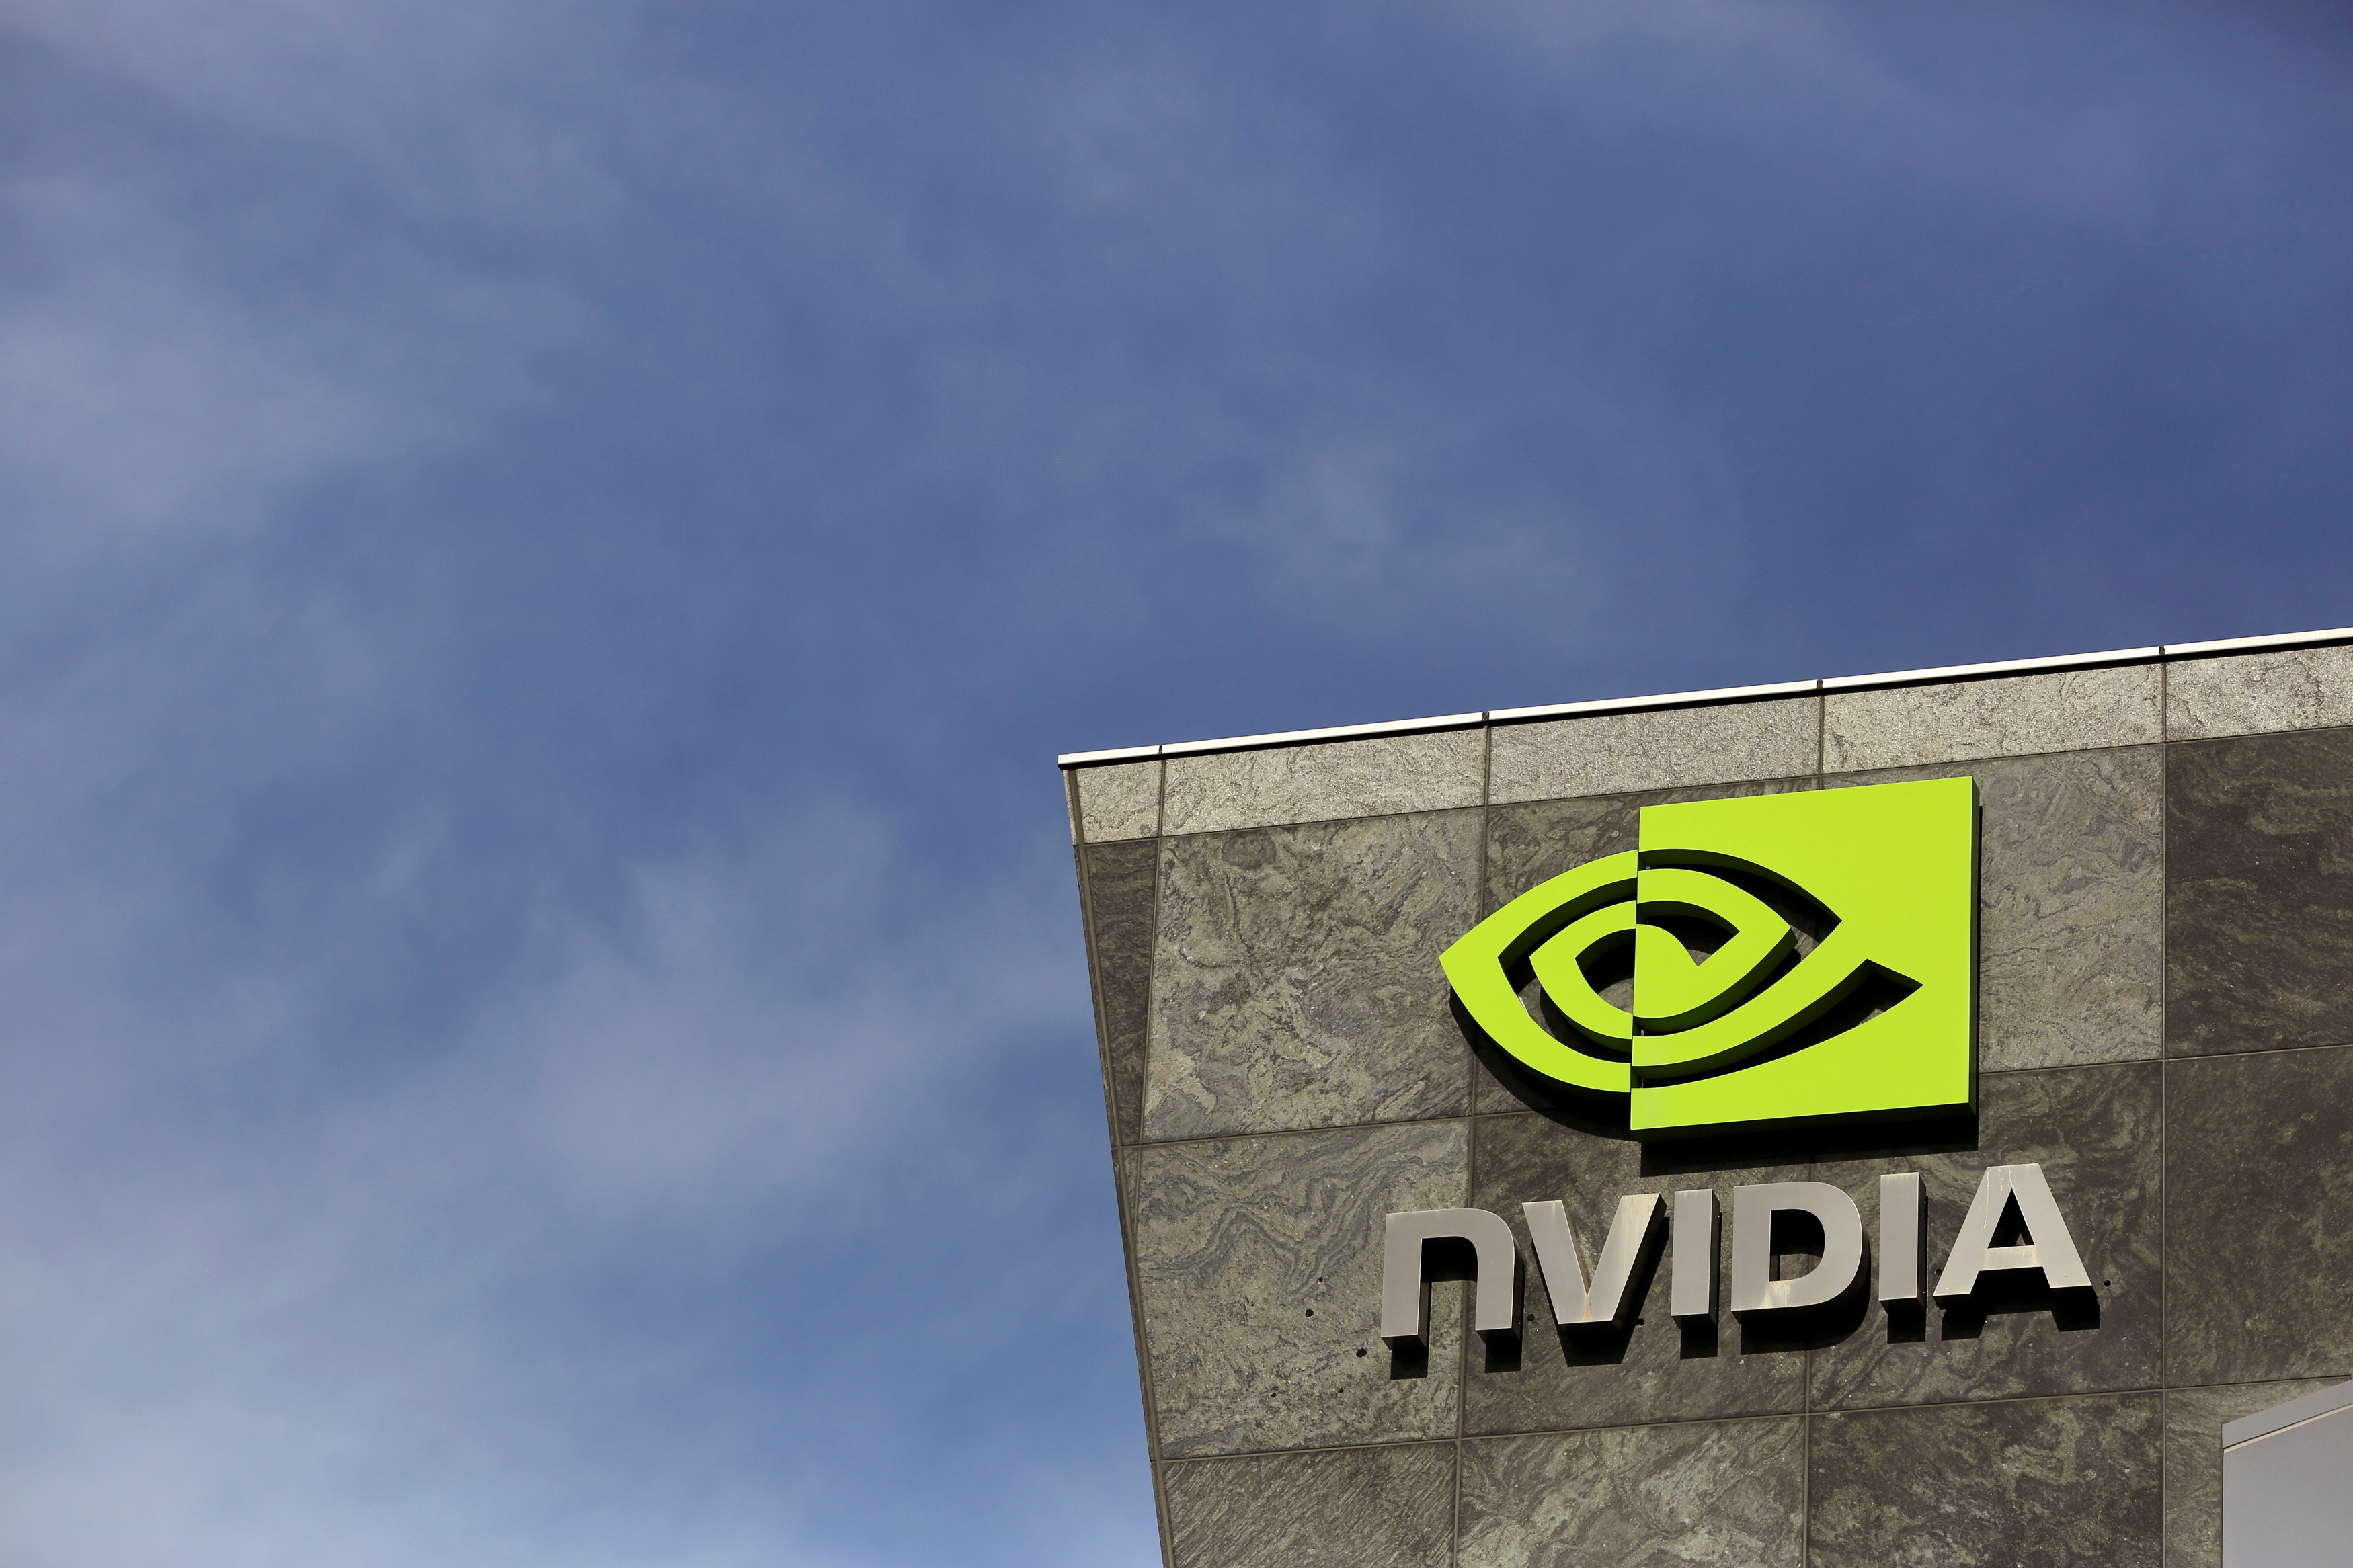 The logo of technology company Nvidia is seen at its headquarters in Santa Clara, California February 11, 2015. REUTERS/Robert Galbraith